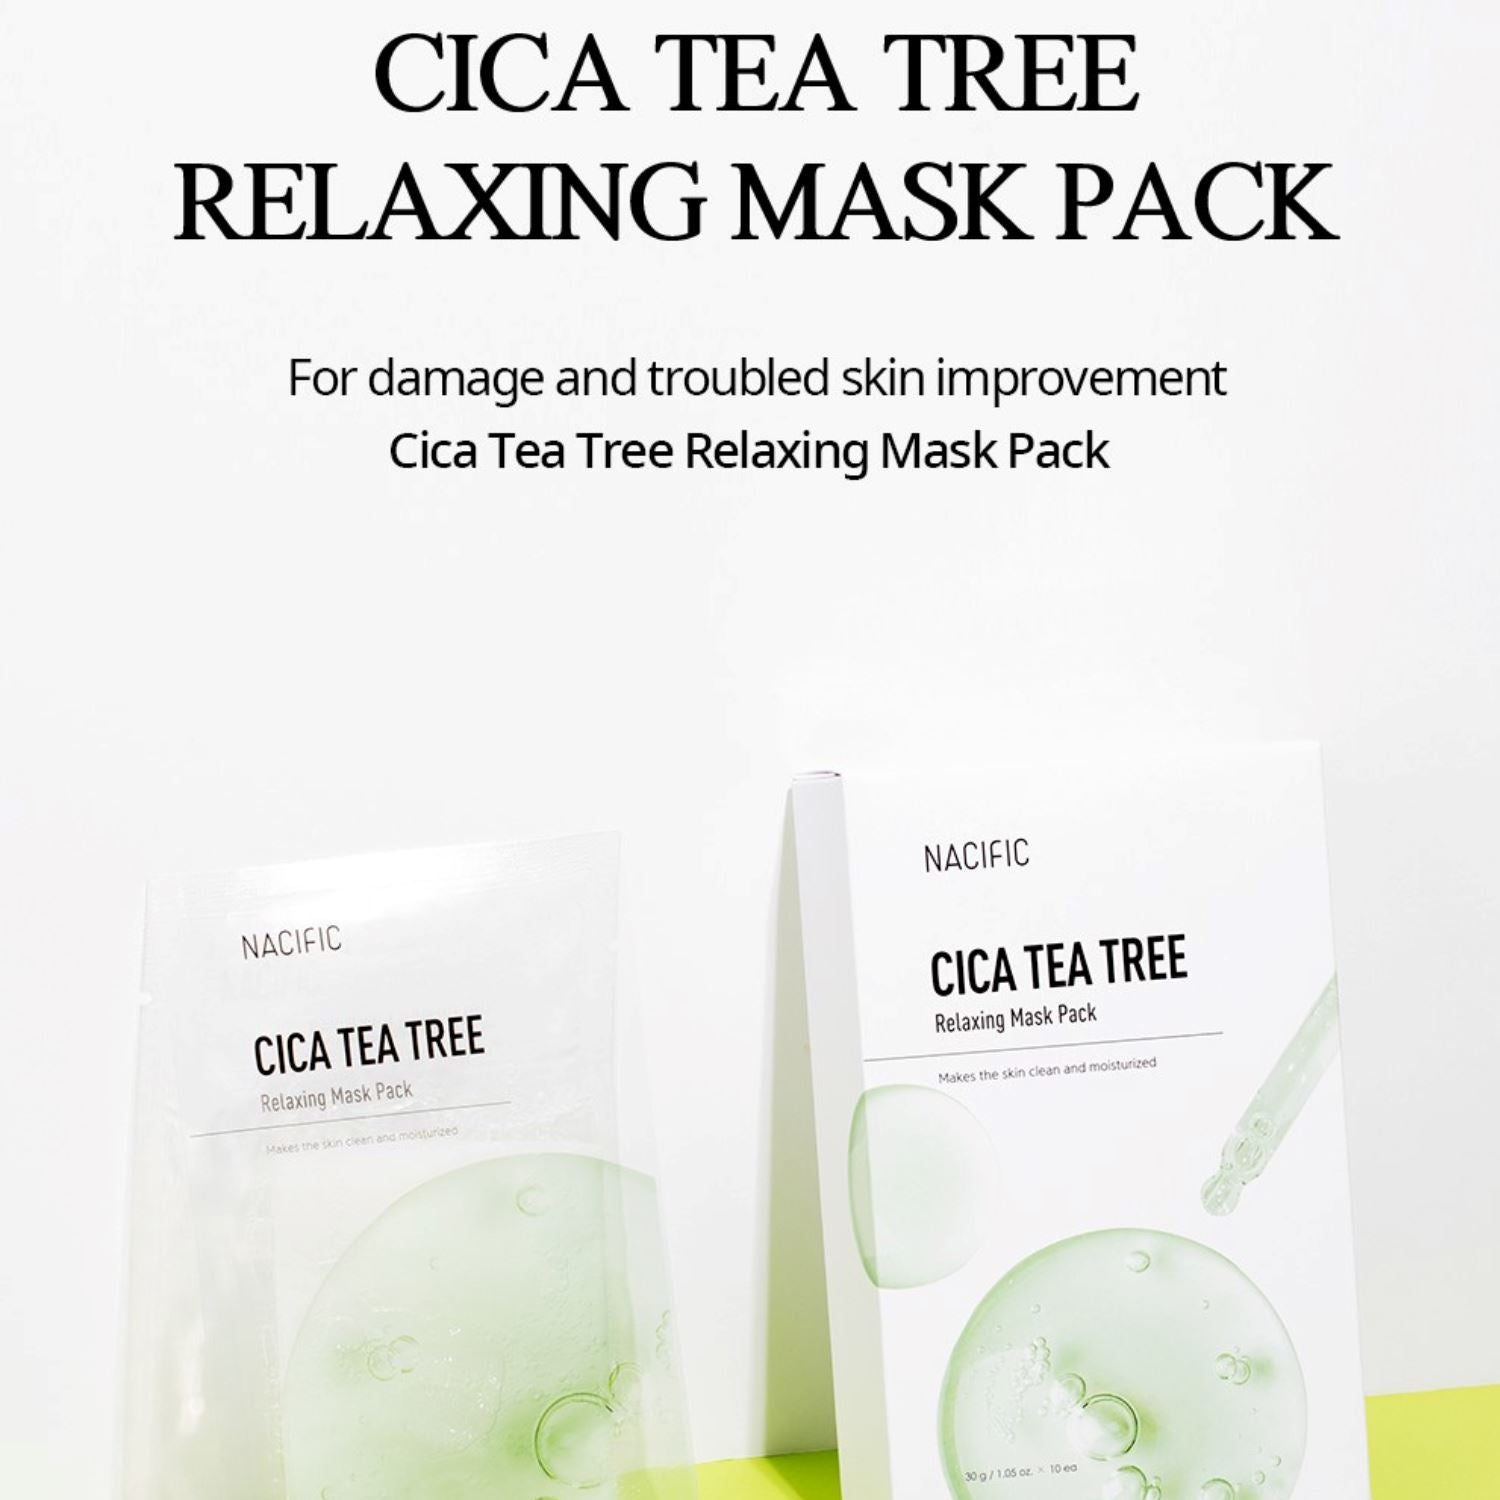 Nacific Cica Tea Tree Relaxing Mask 30g Skin Care Nacific ORION XO Sri Lanka